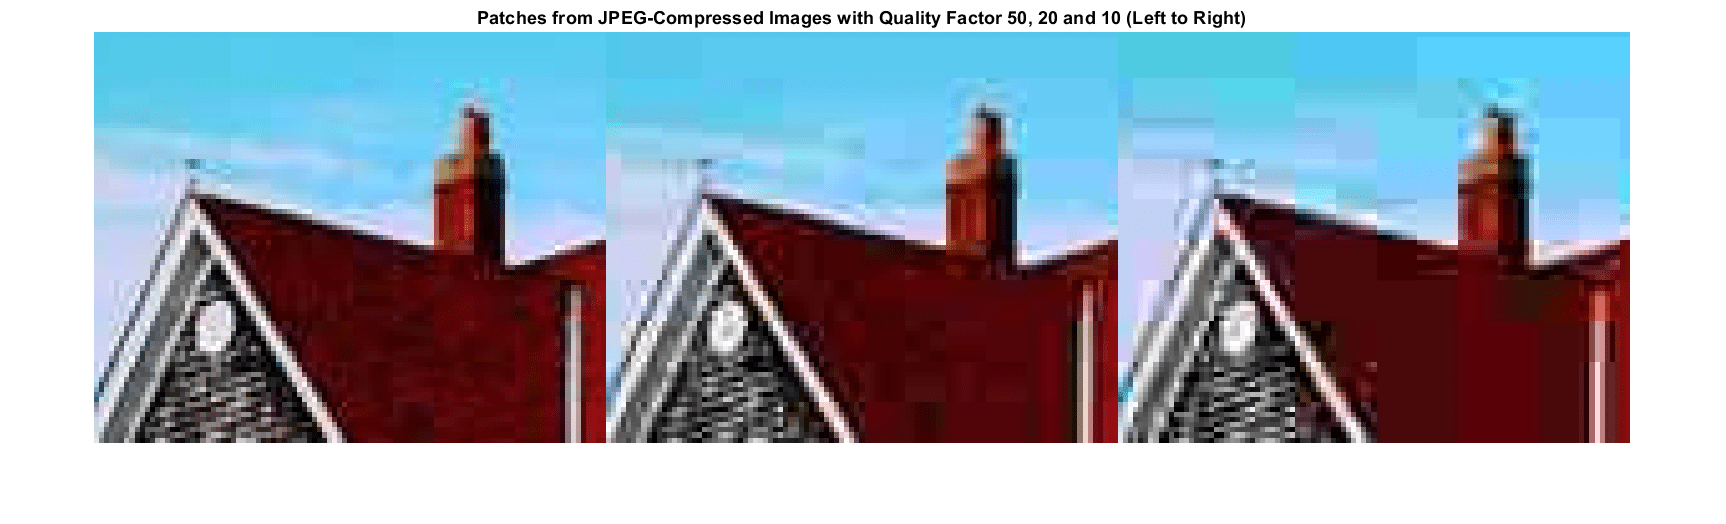 JPEG Image Deblocking Using Deep Learning